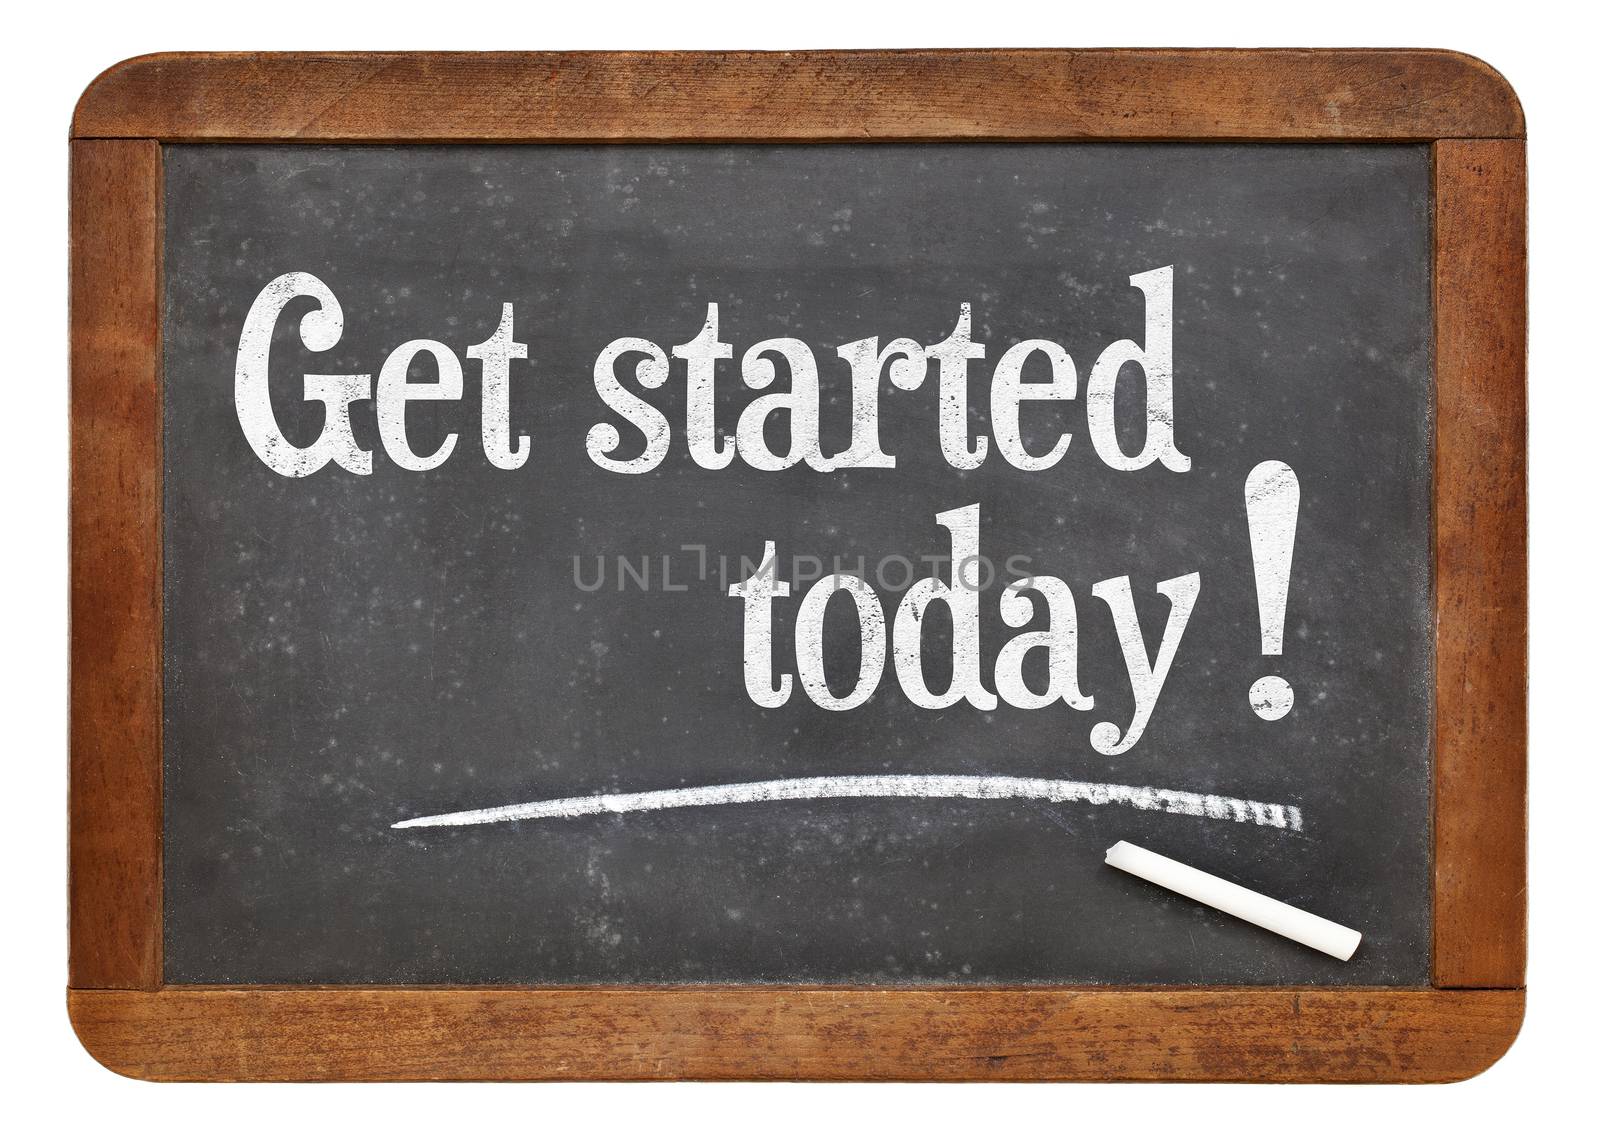 Get started today - text on a vintage slate blackboard - motivation concept